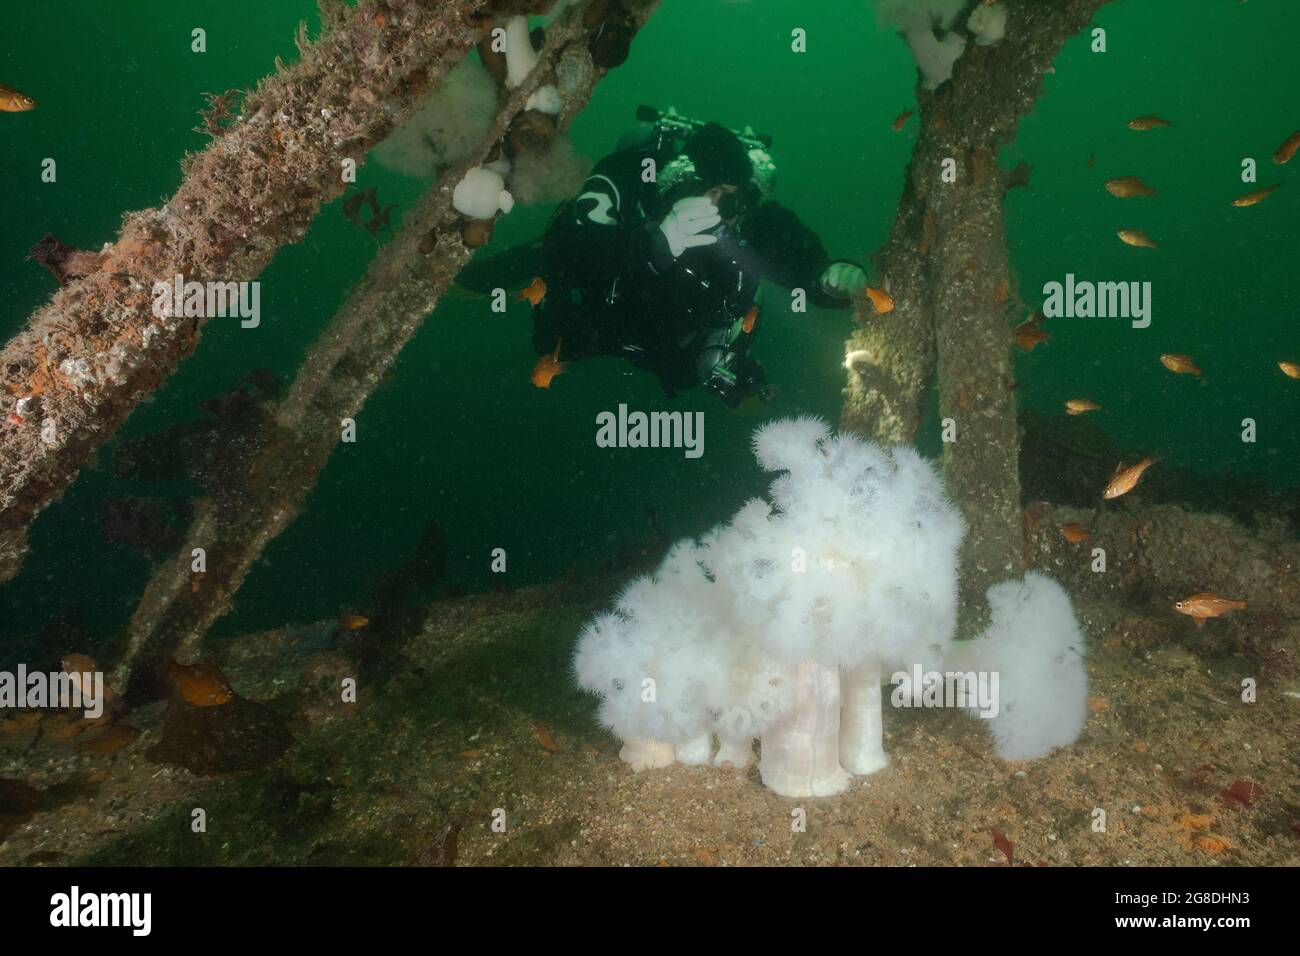 Scuba diver exploring a wreck with a white plumose anemone. Stock Photo